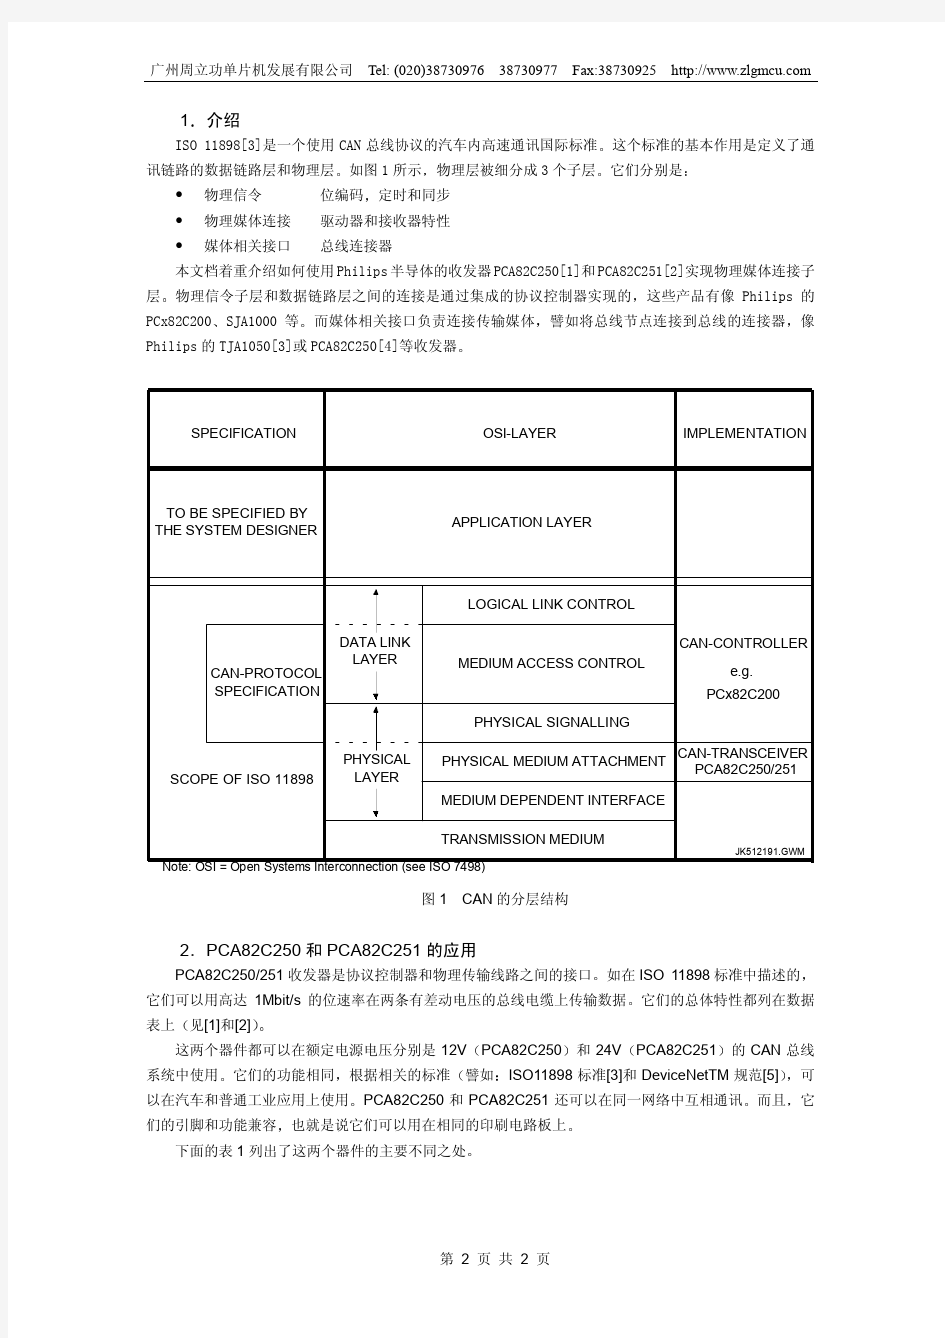 PCA82C250应用指南中文资料